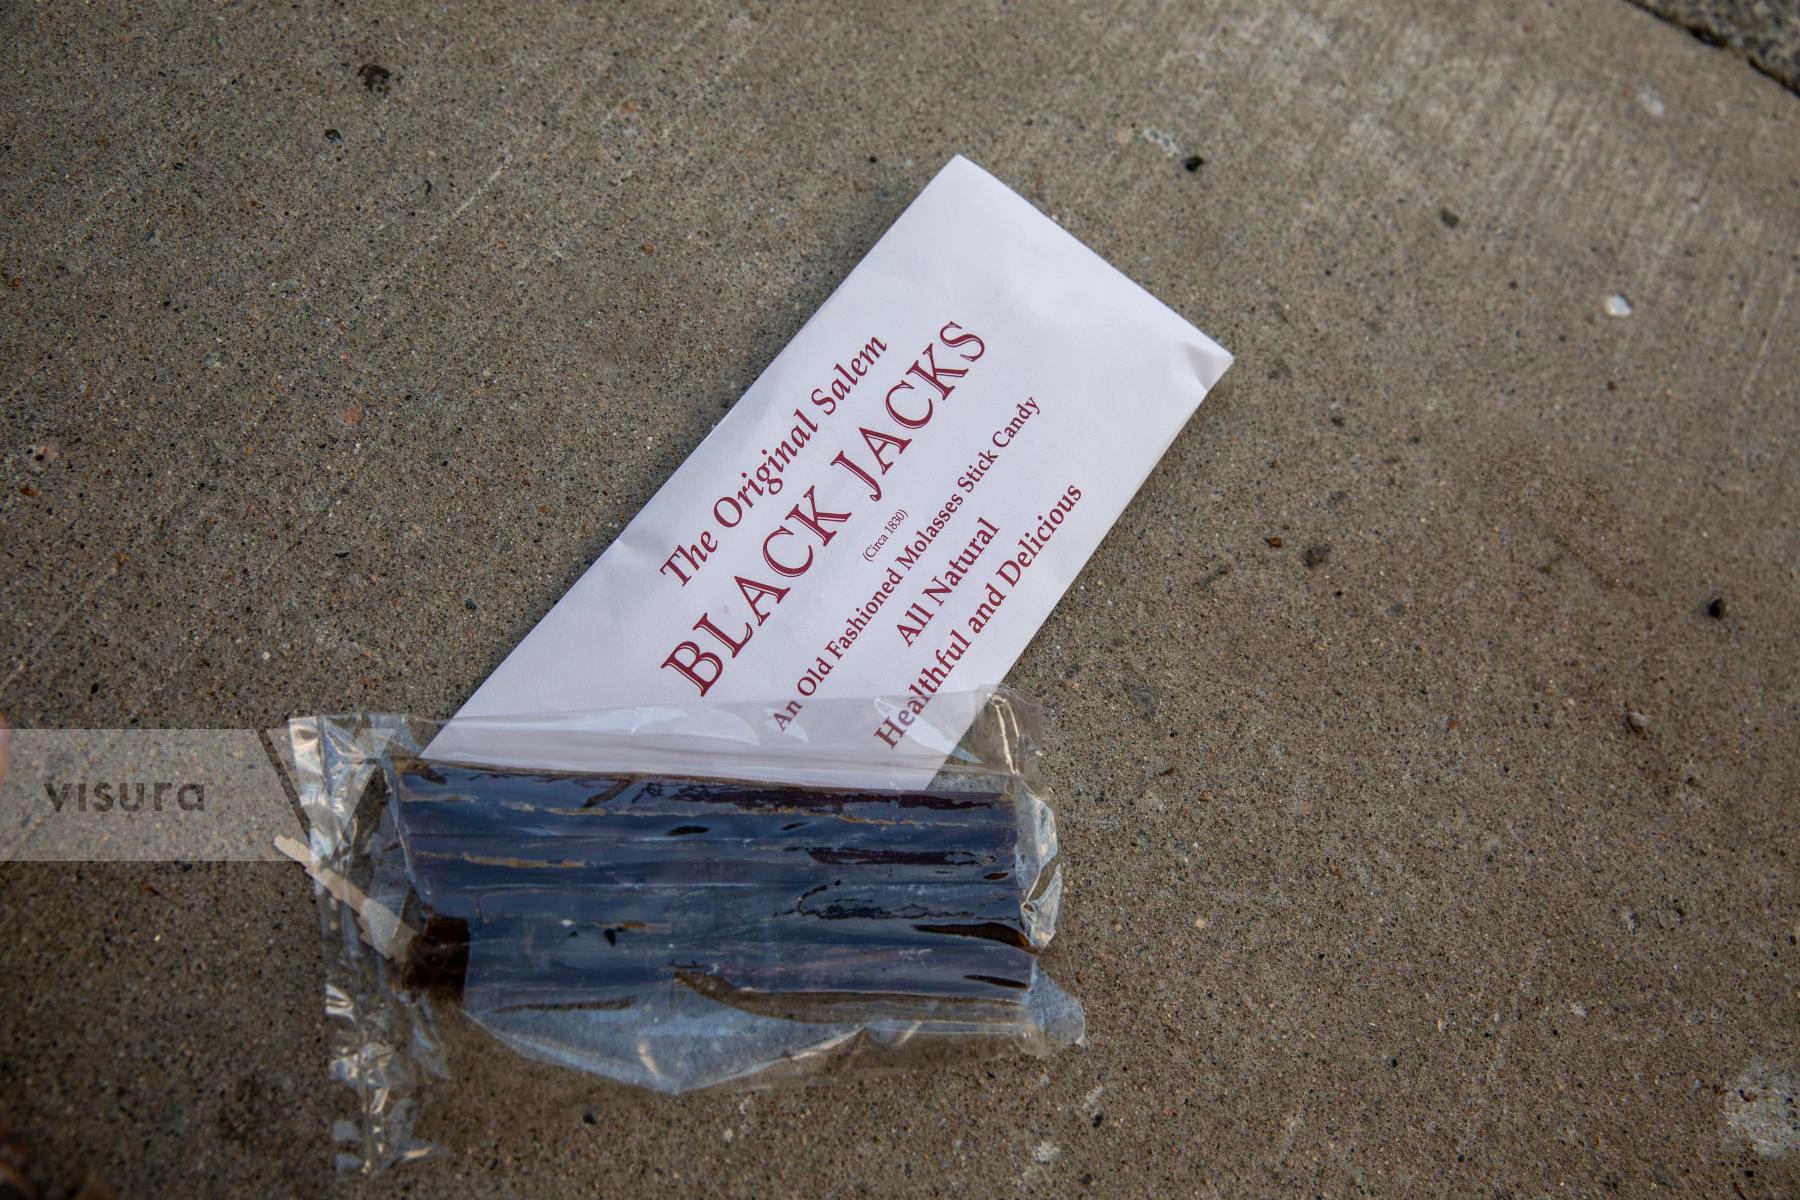 Purchase The Original Salem Black Jacks candy by Katie Linsky Shaw